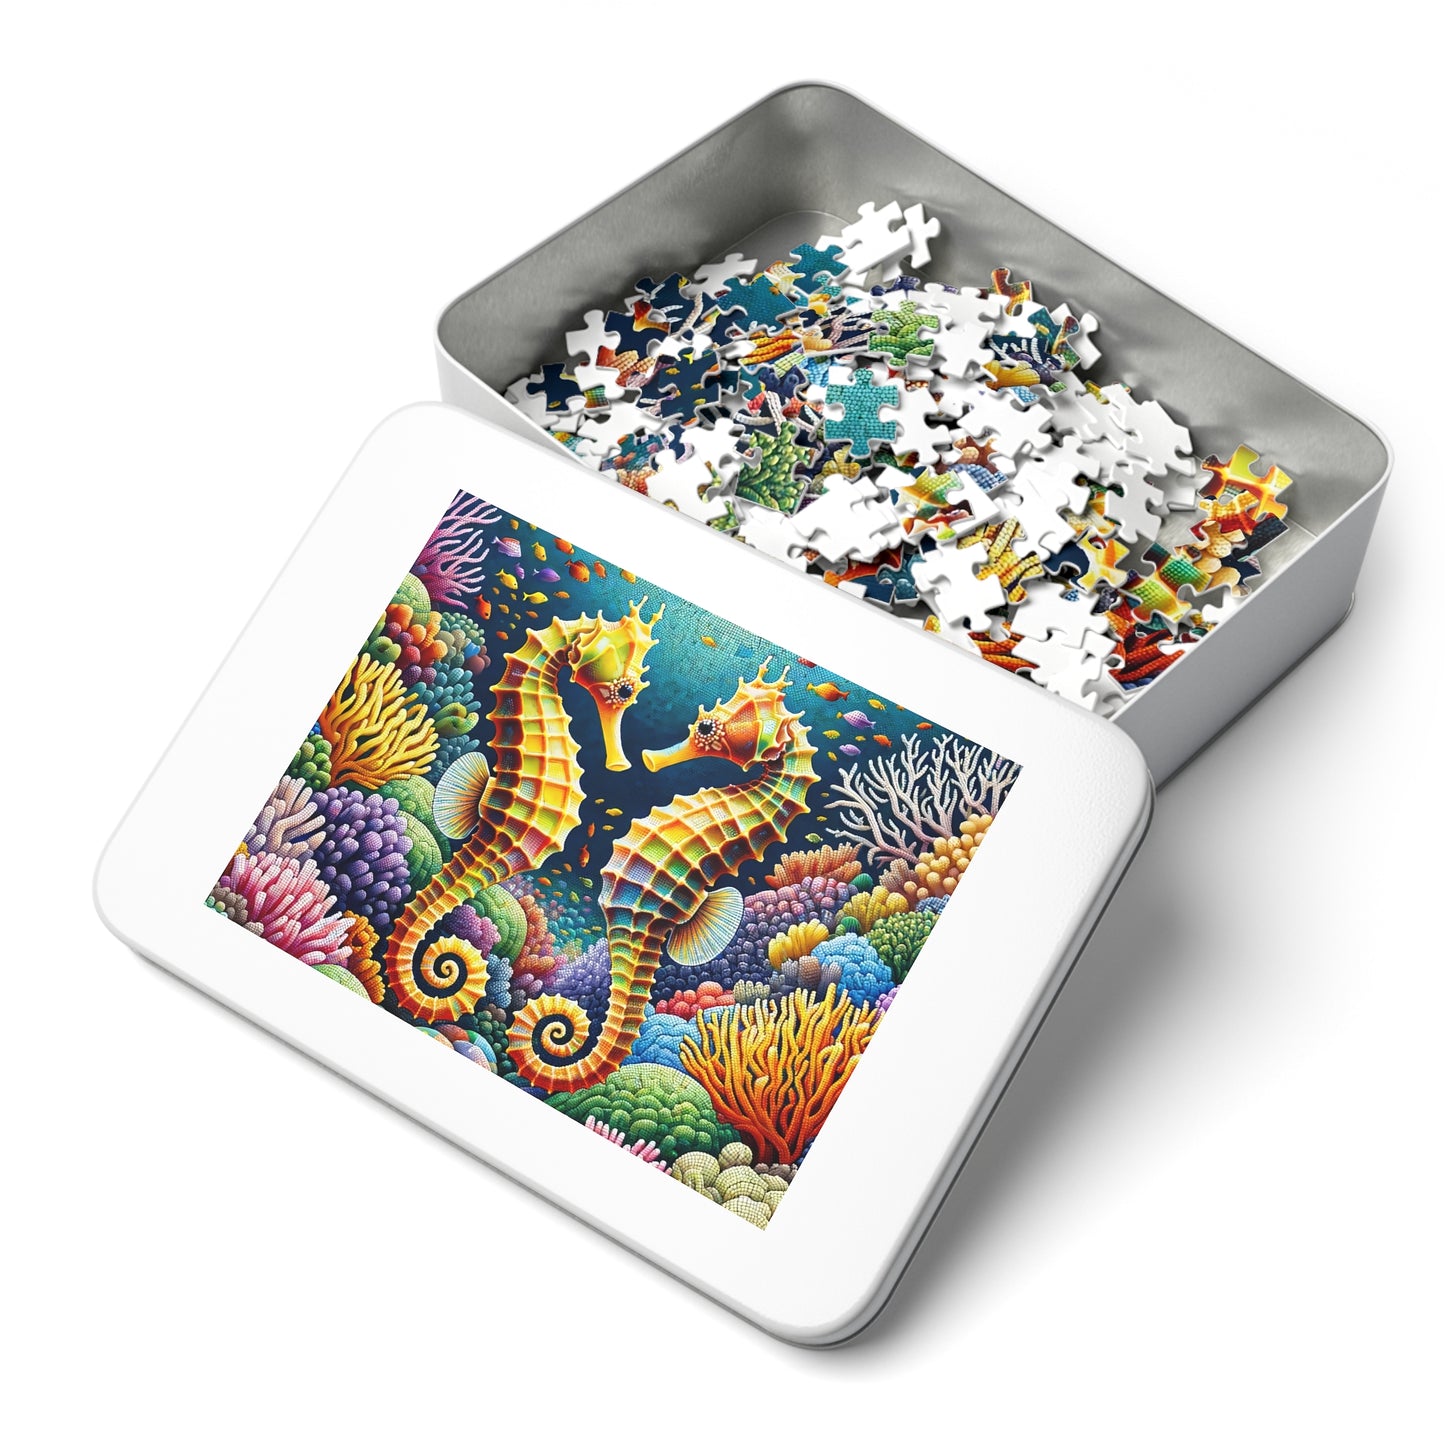 Seahorses, Puzzle, Mosiac, Unique, Jigsaw, Family, Adults (110, 252, 500,1000-Piece)